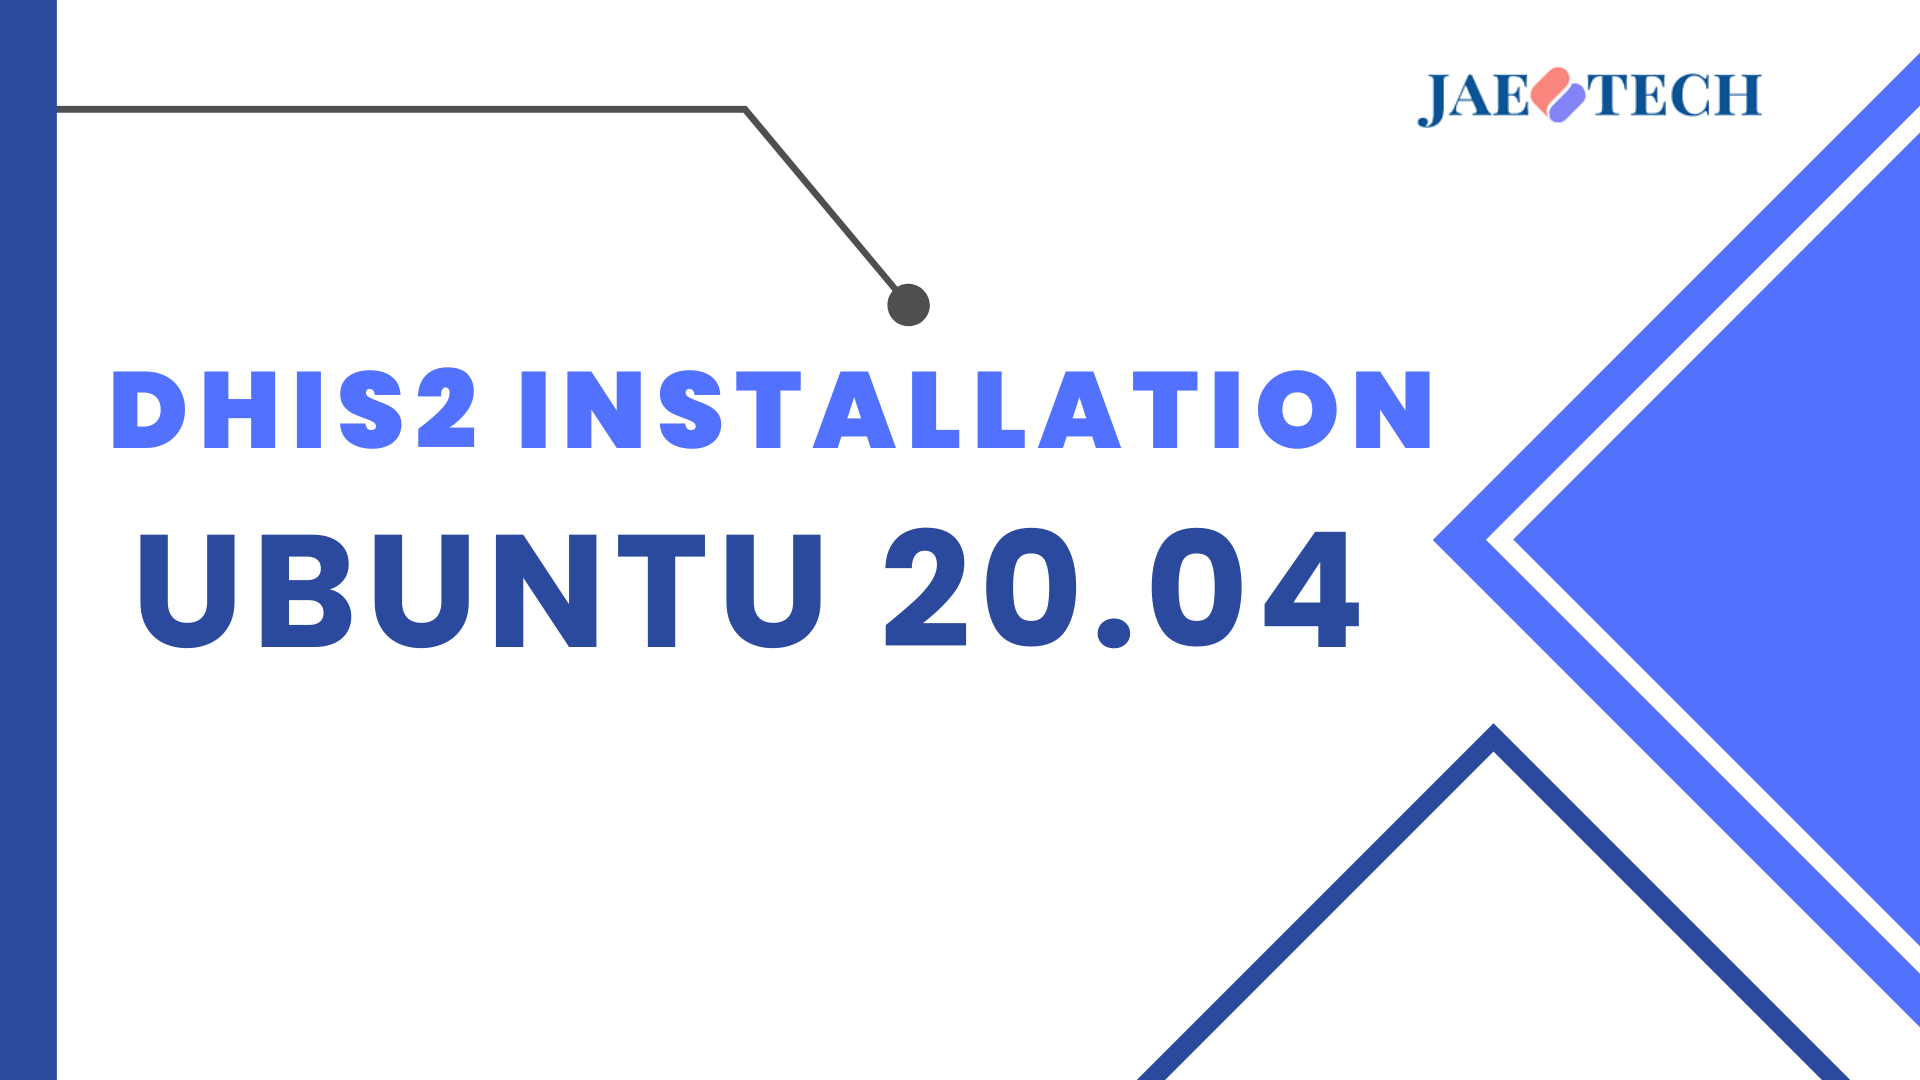 DHIS2 Installation - Ubuntu 20.04